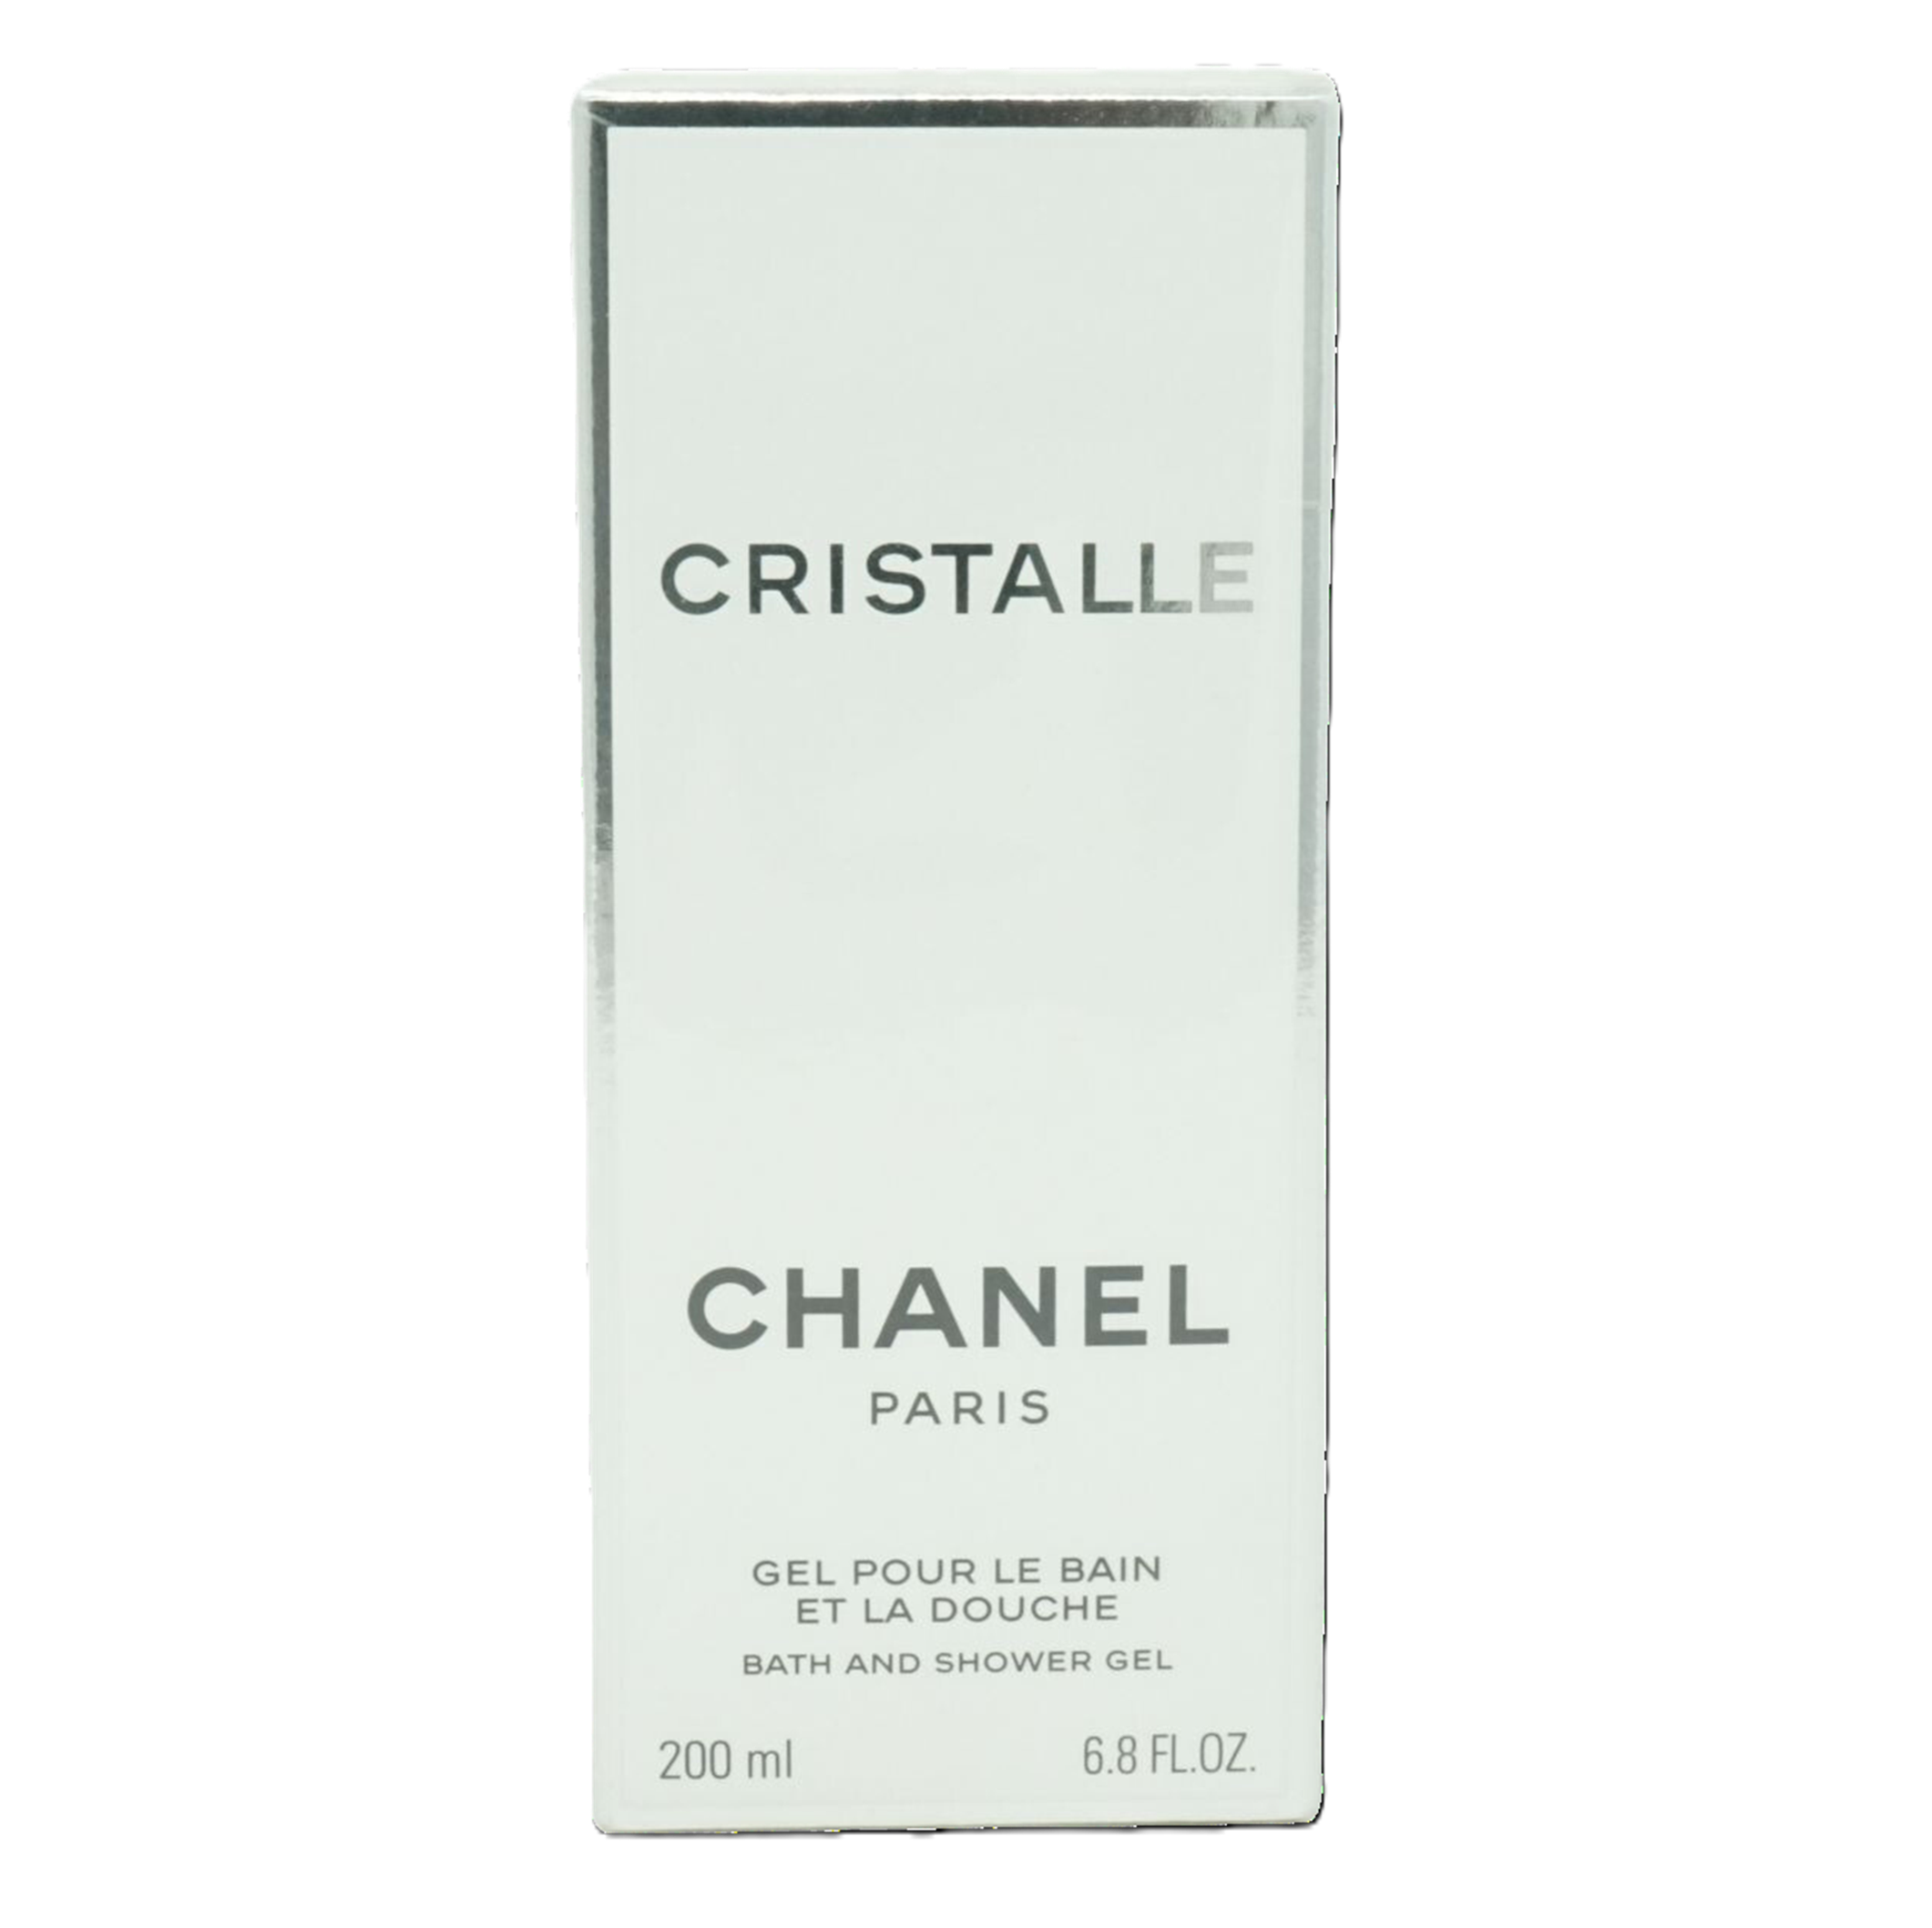 Chanel Cristalle Bath And Shower gel 200 ml